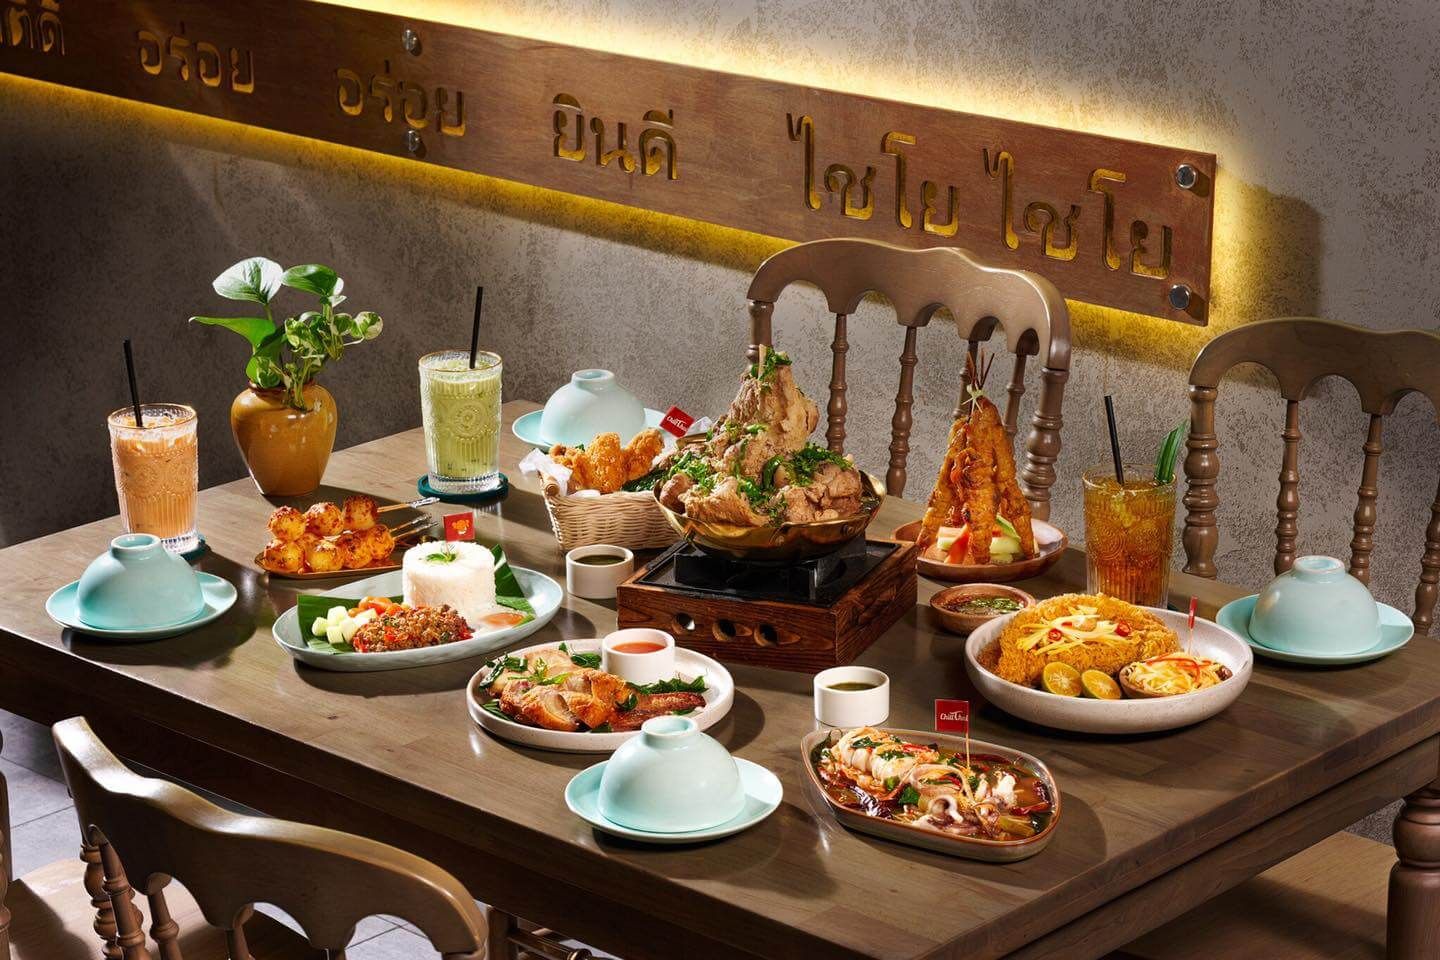 Chill Thai - Thai Food - Nguyễn Thị Thập